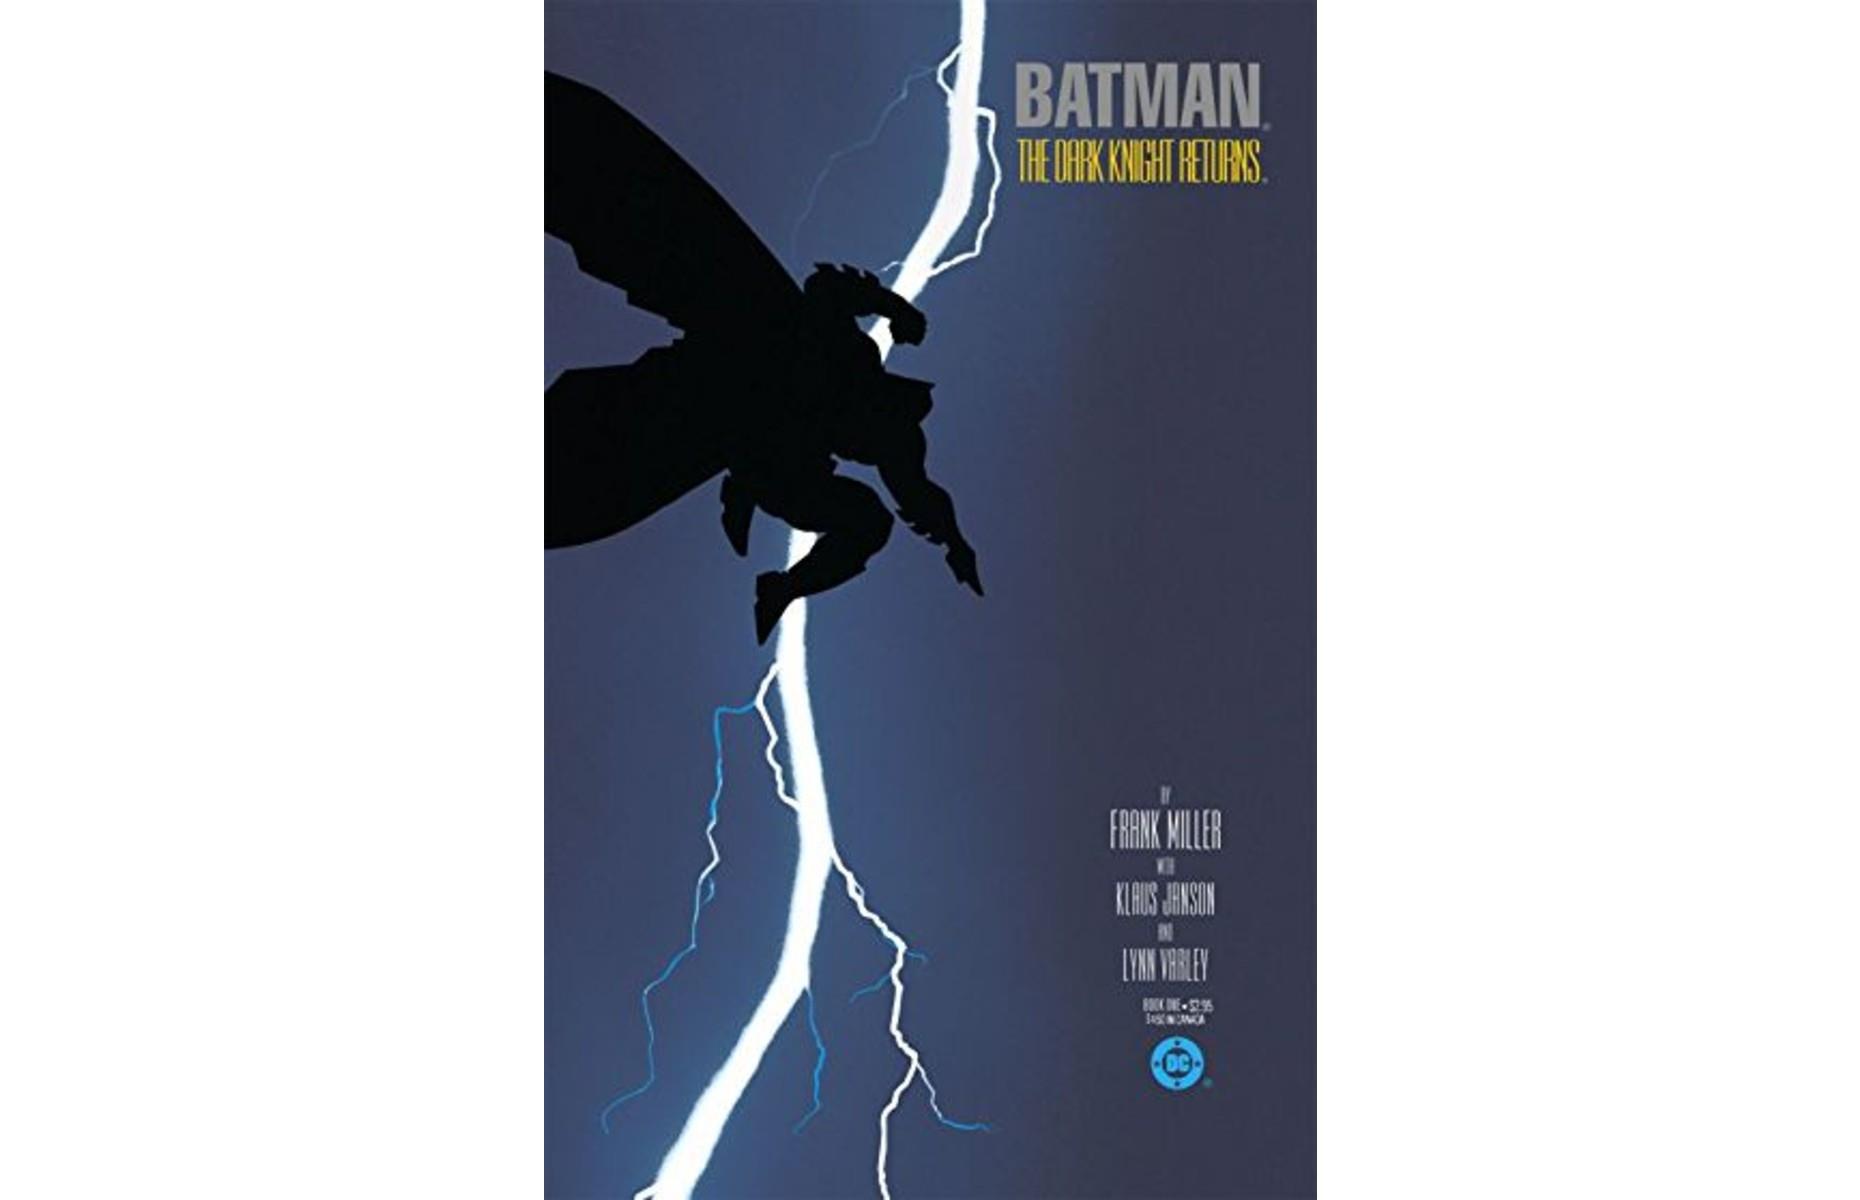 Batman: The Dark Knight Returns #1: up to £725 ($950)